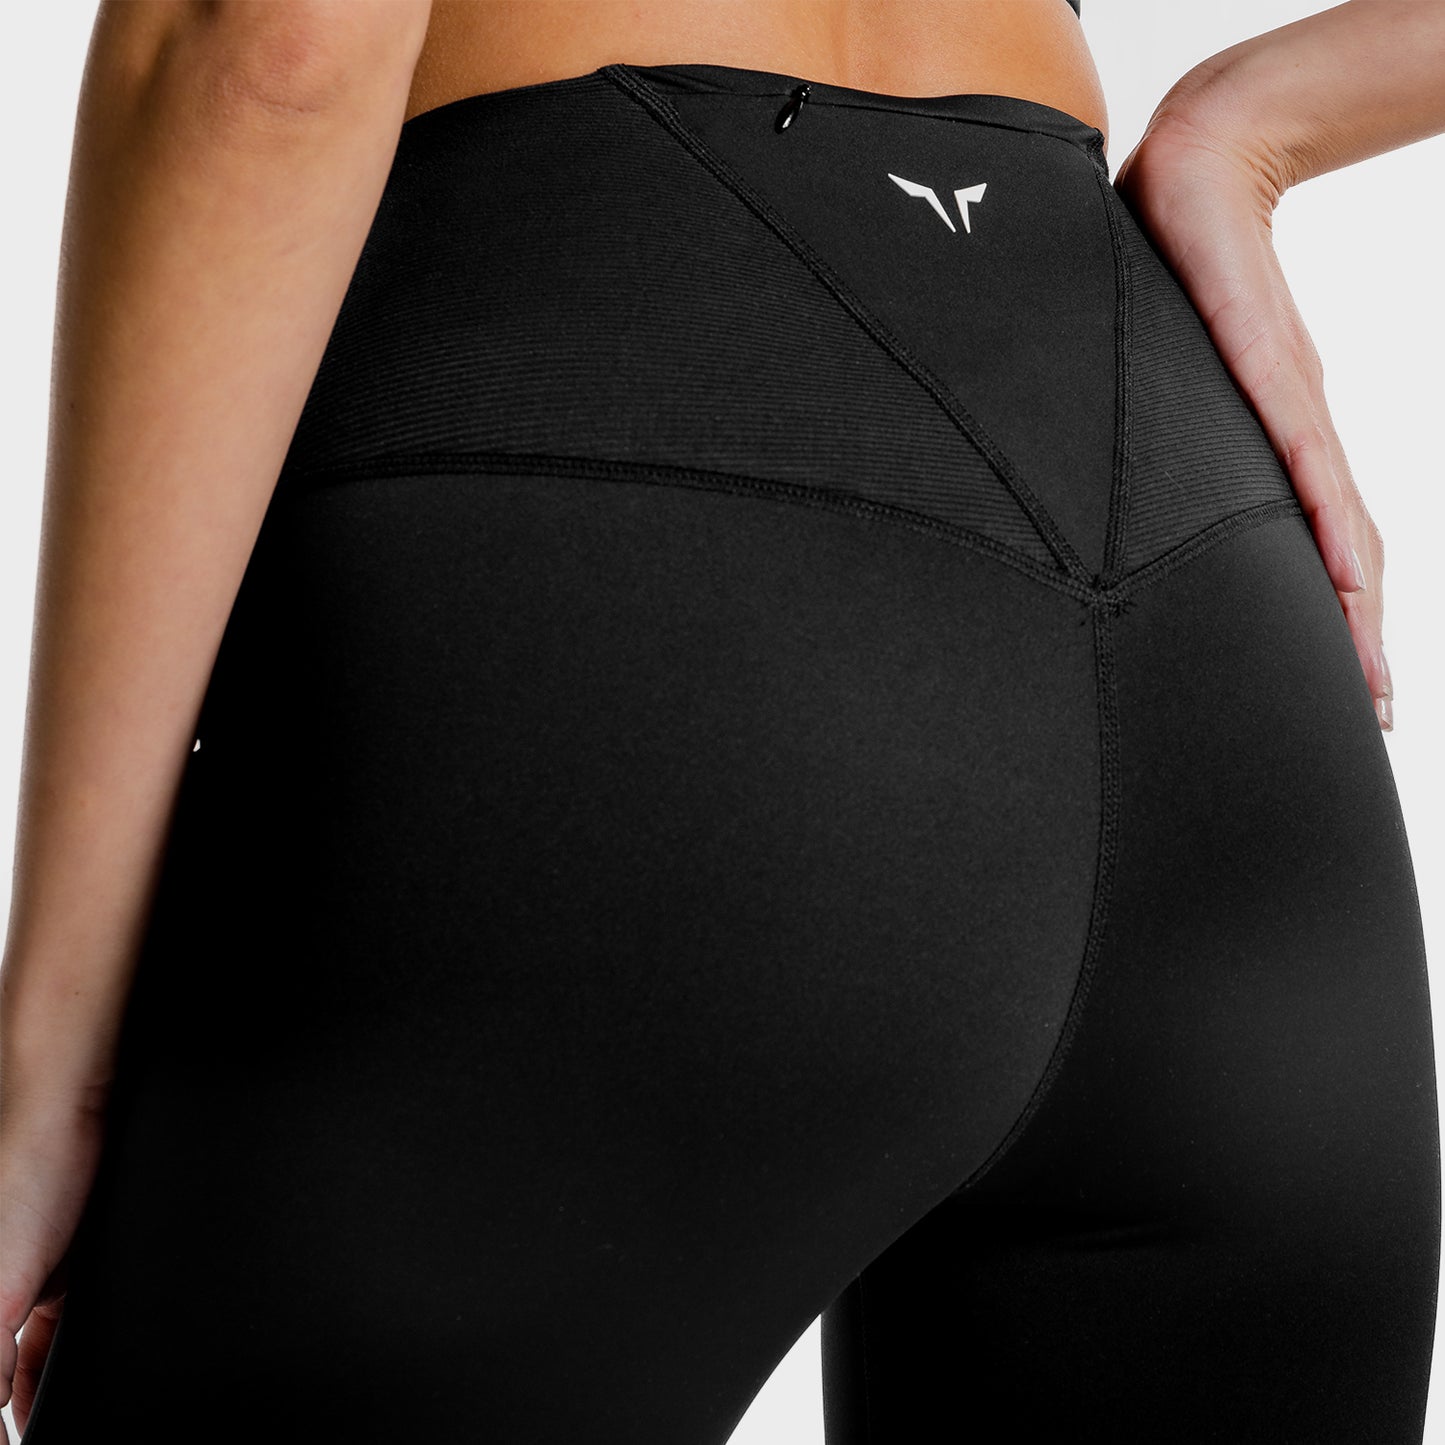 squatwolf-gym-leggings-for-women-core-leggings-78-black-workout-clothes